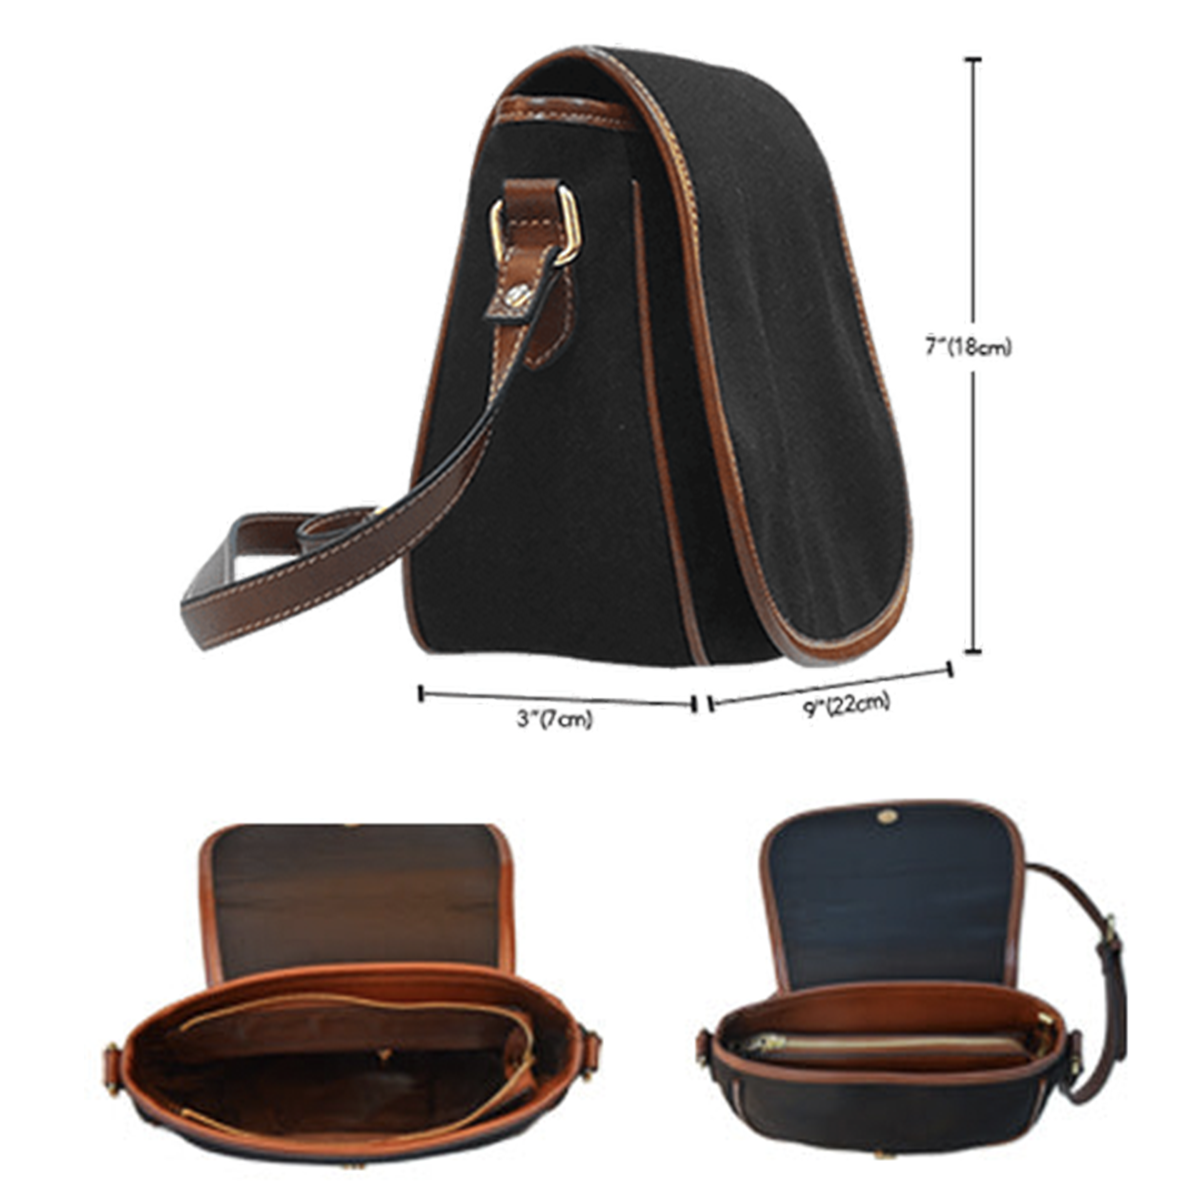 Copeland Tartan Saddle Handbags